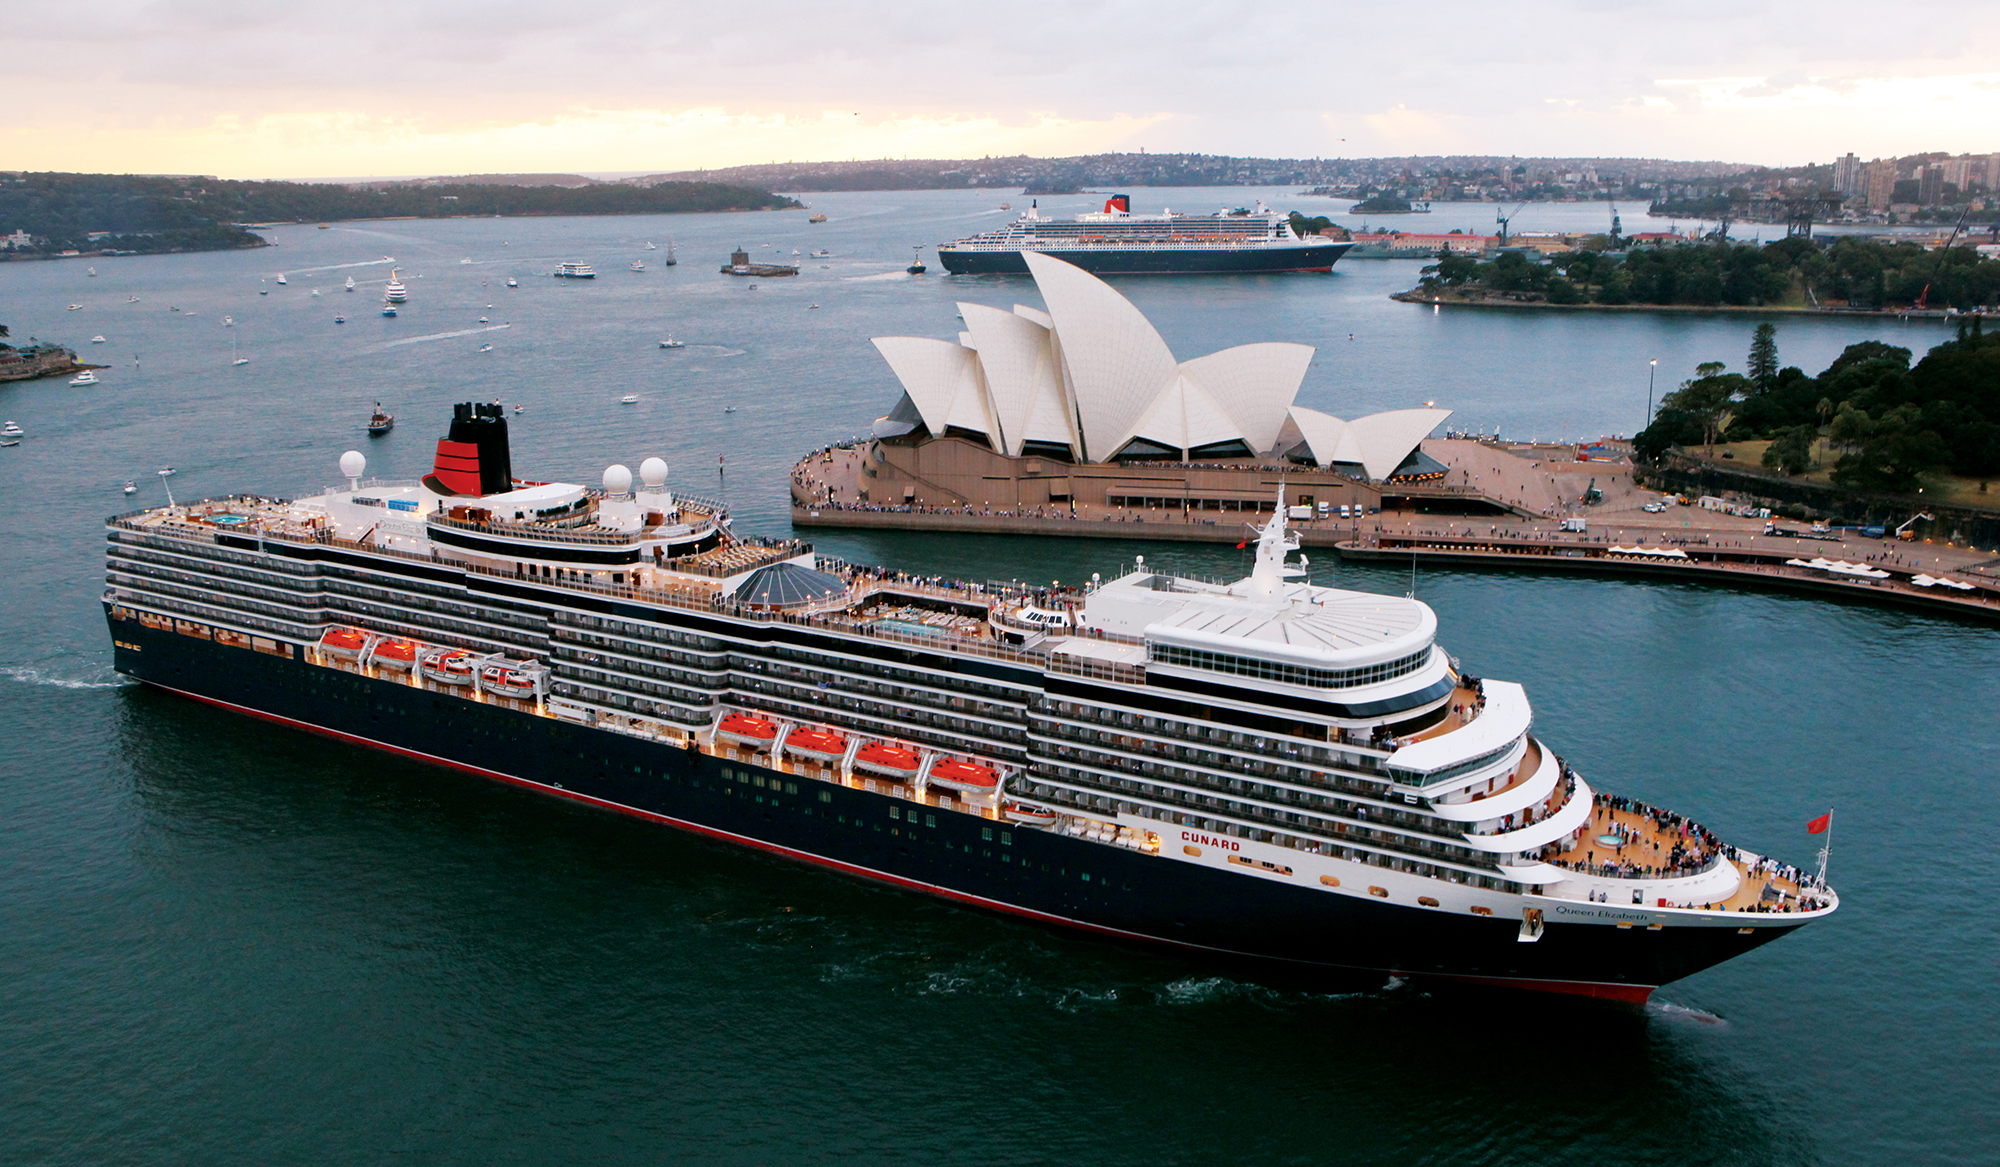 11++ Australian cruise ships 2016 ideas in 2021 